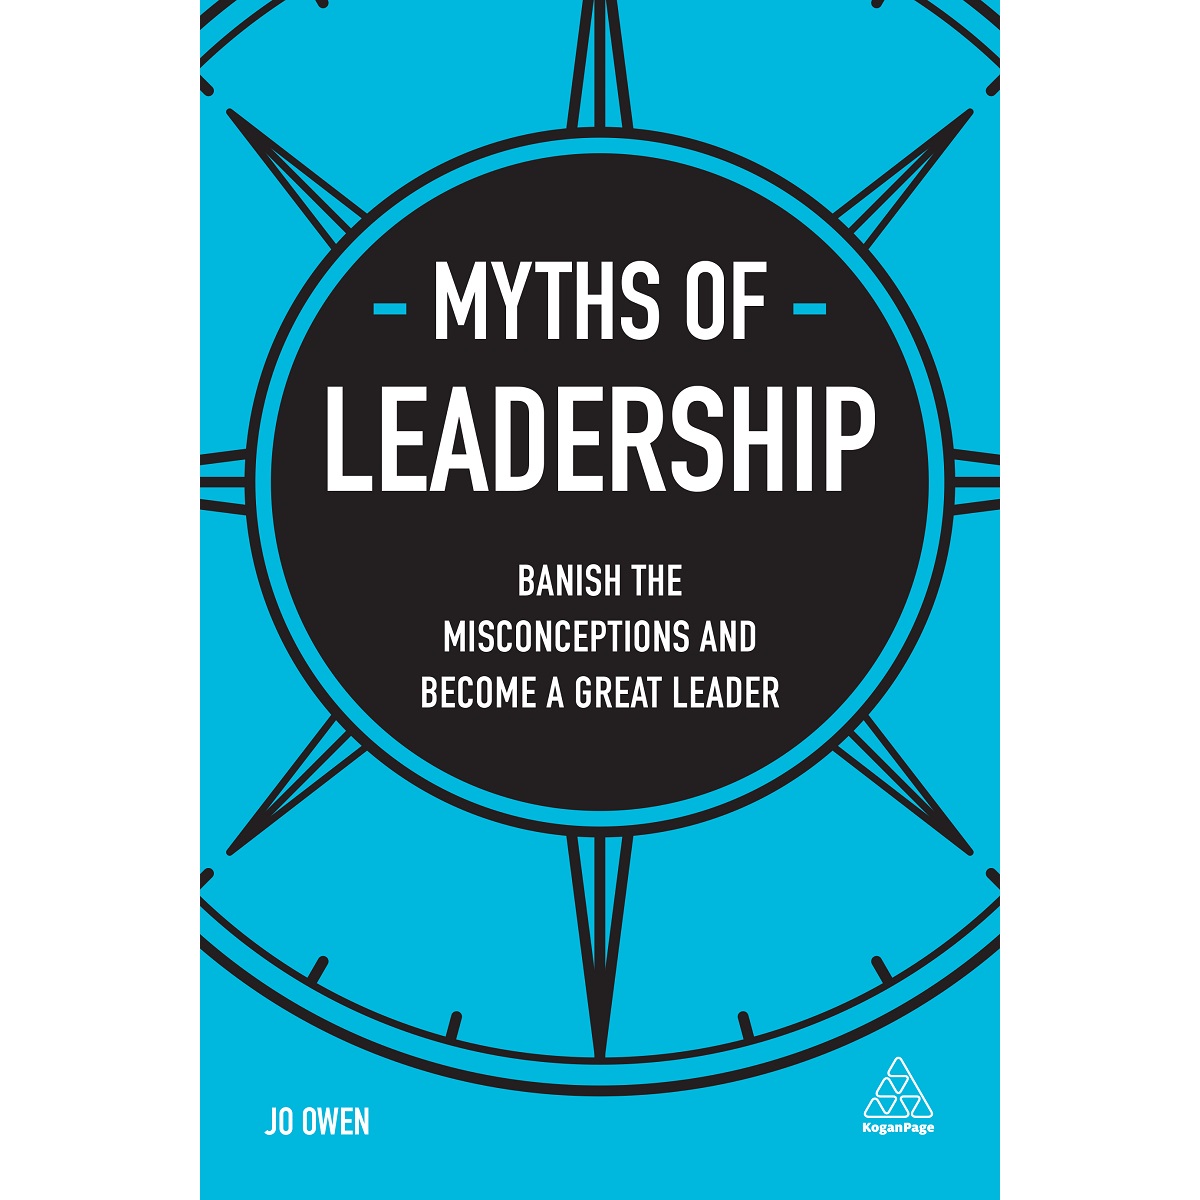 Myths of Leadership by Jo Owen